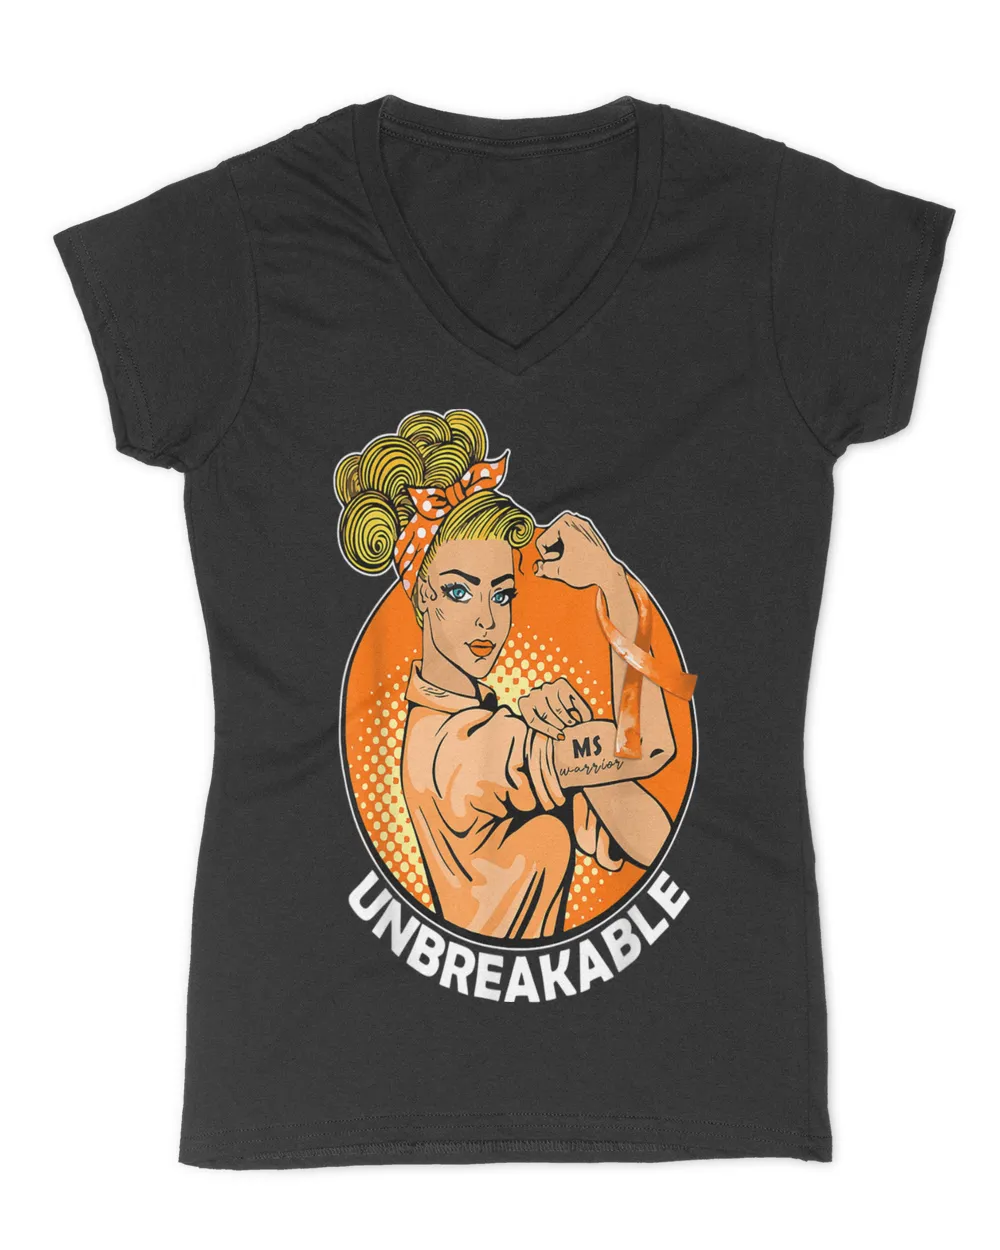 MS Warrior Unbreakable Multiple Sclerosis Awareness T-Shirt